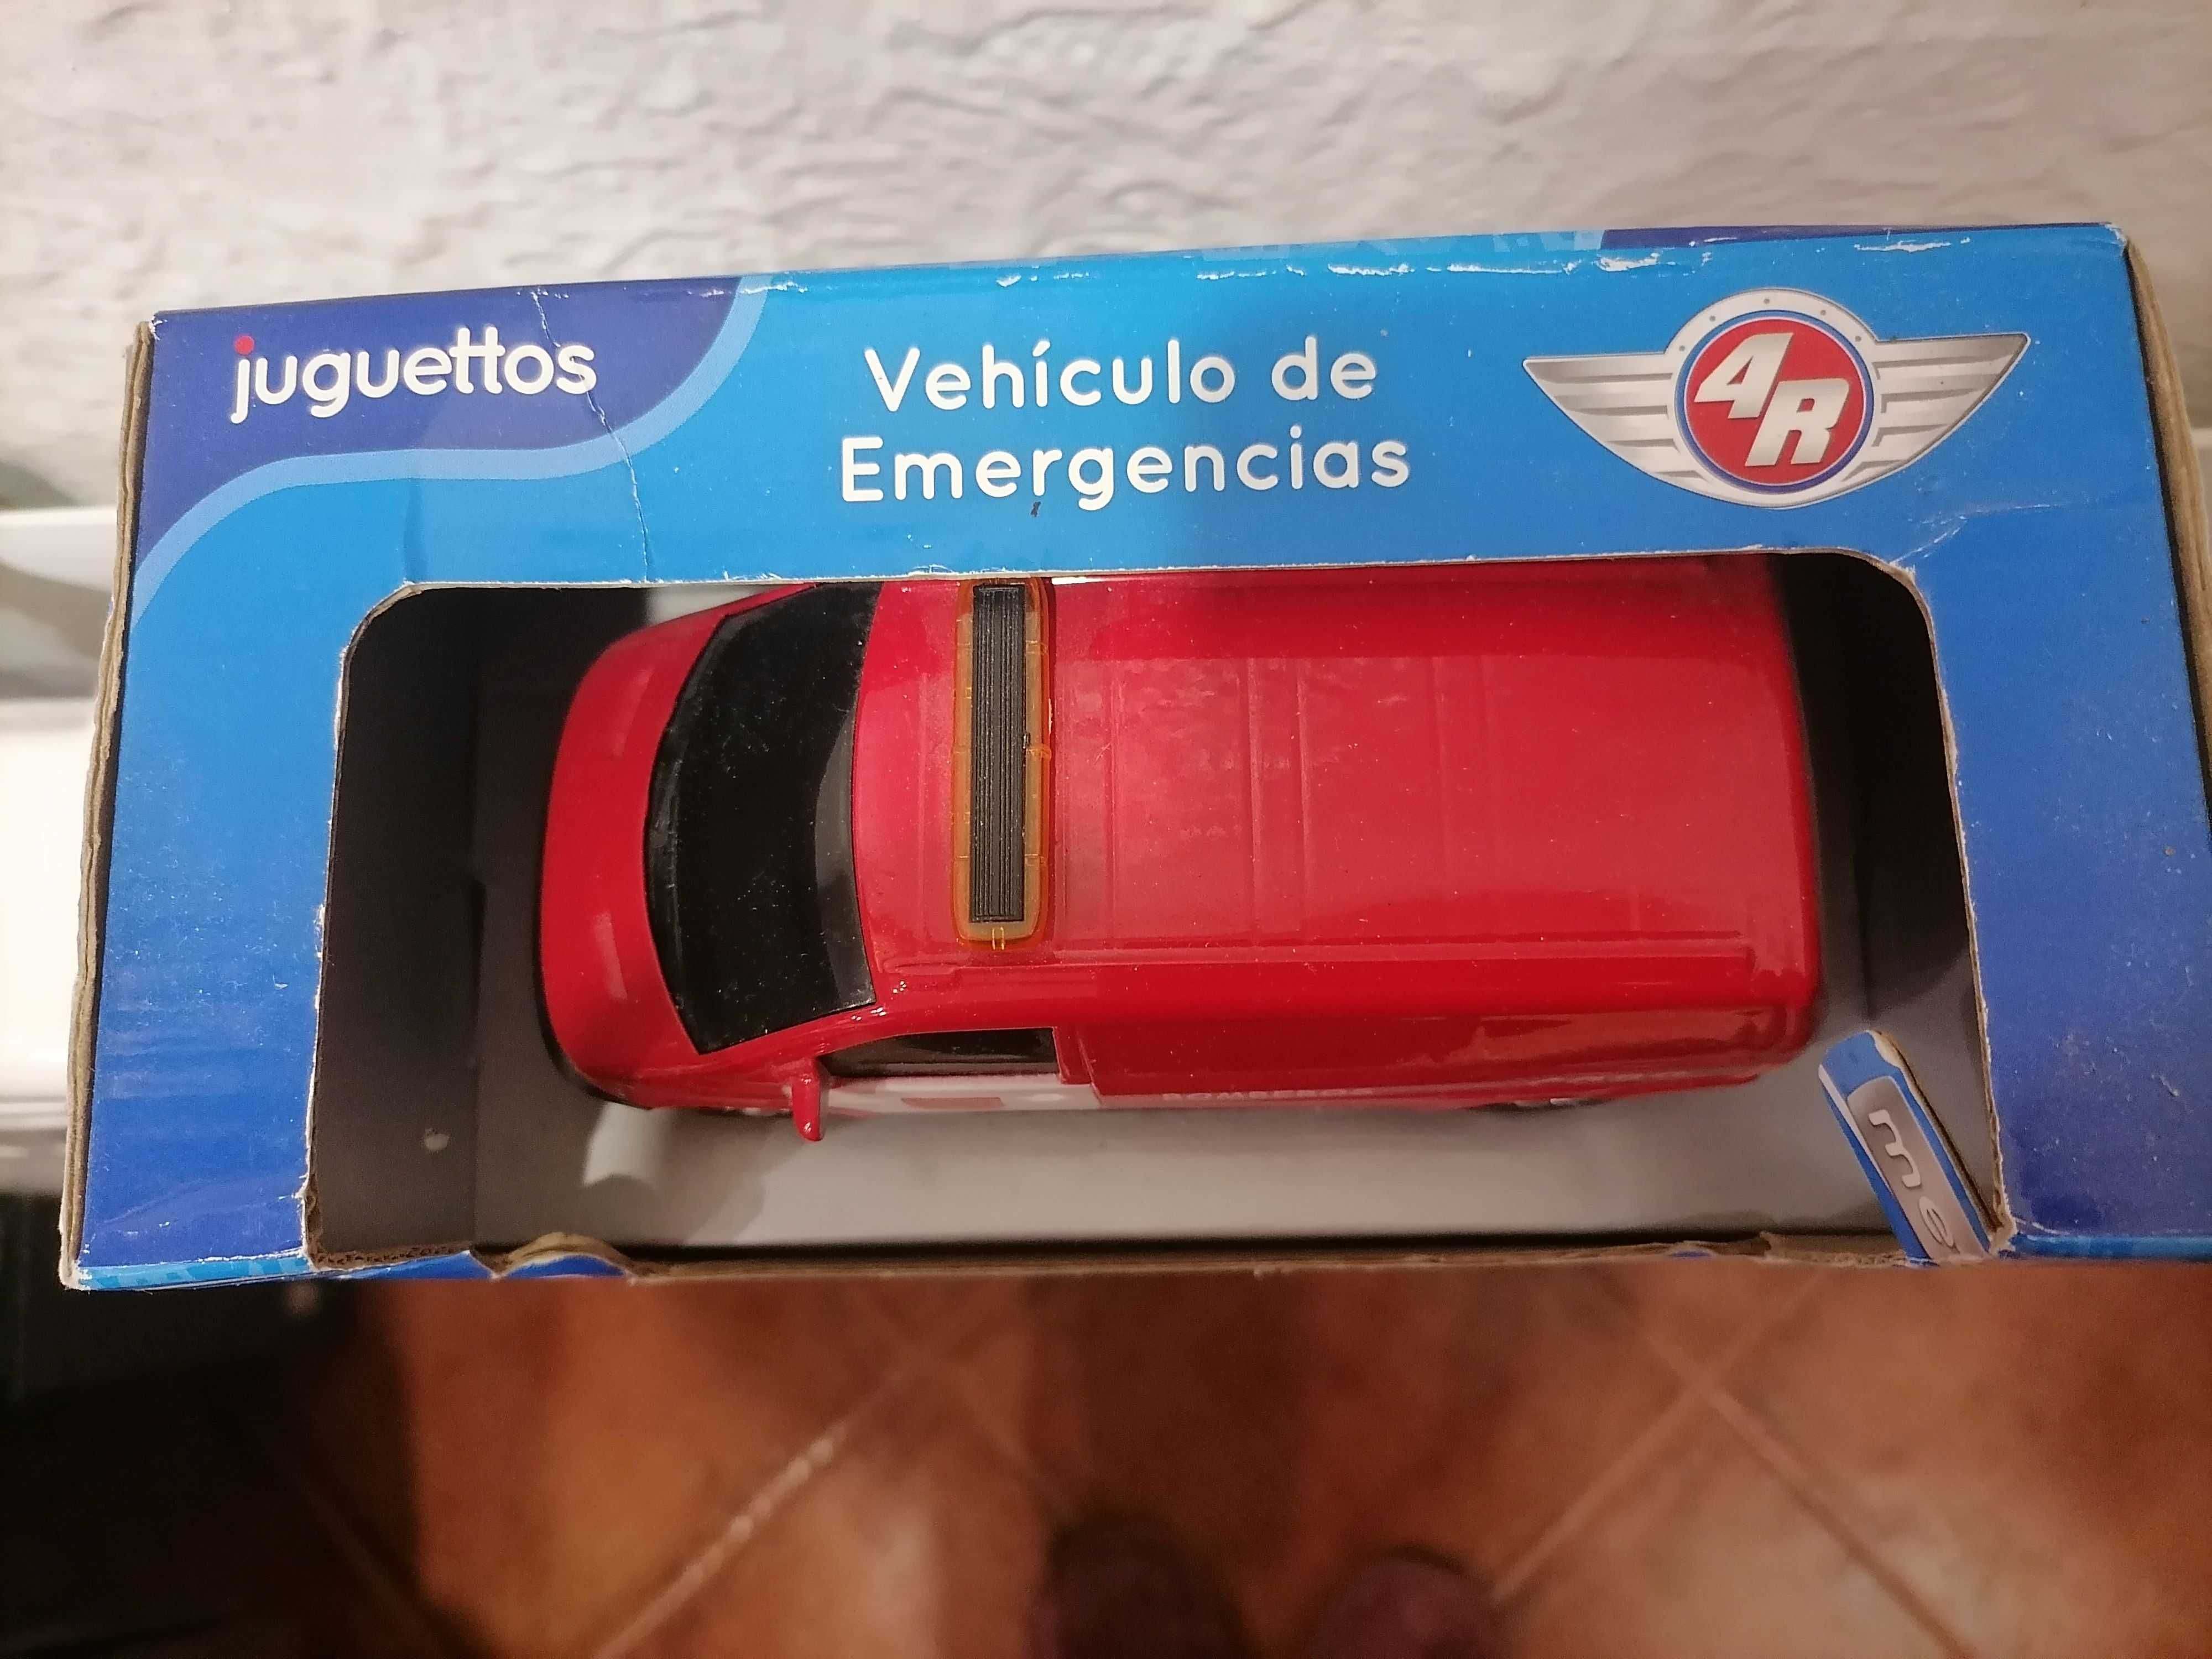 4R Juguettos, Metal - Veículo Emergência - Escala 1:43